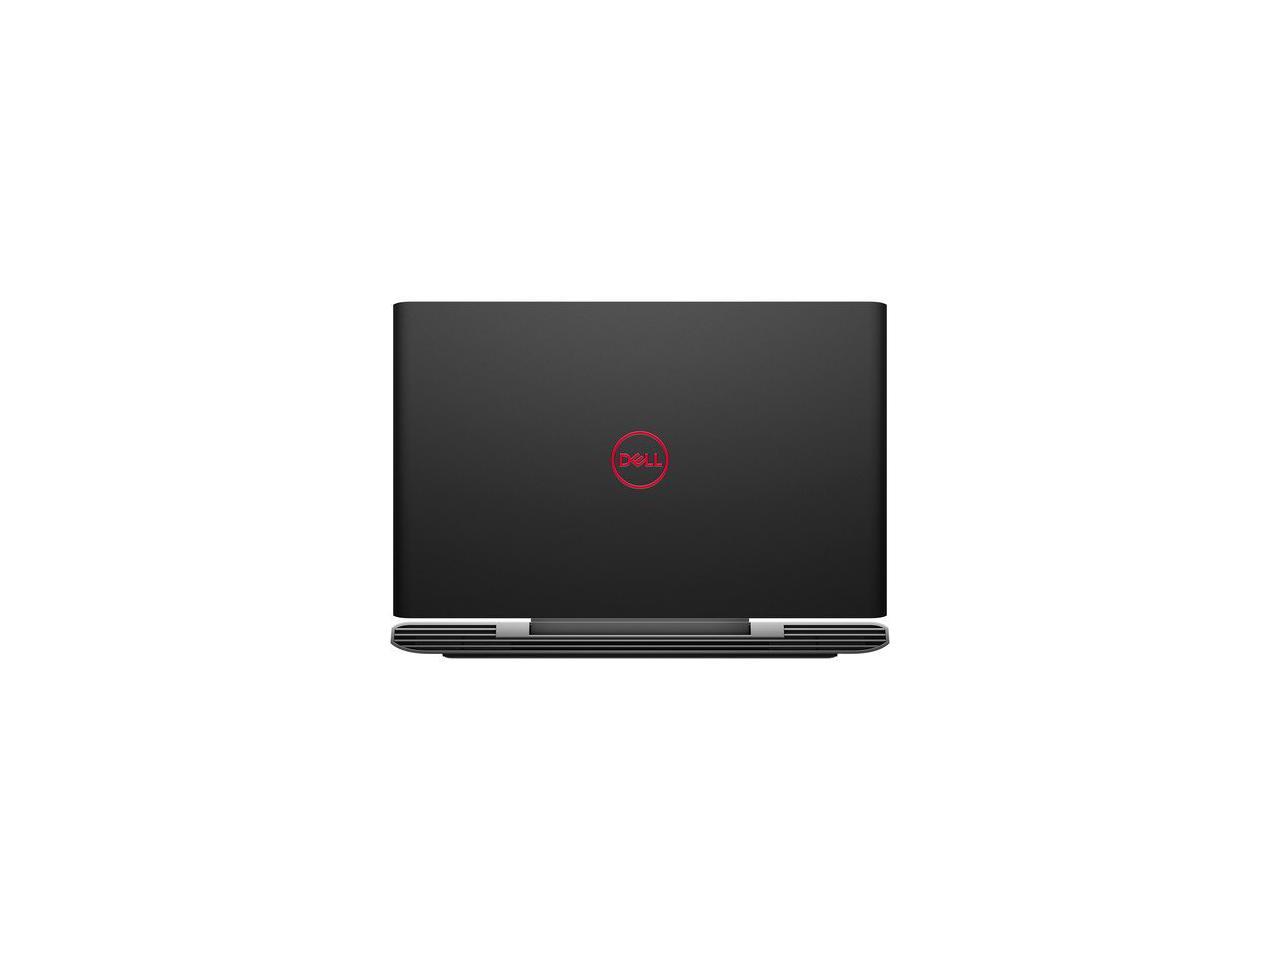 Dell Inspiron 7000 15.6" IPS FHD Gaming Laptop | VR Ready | Intel Quad Core i5-7300HQ | 32GB RAM 1024GB SSD | NVIDIA GeForce GTX 1060 6GB GDDR5 | Windows 10 Black